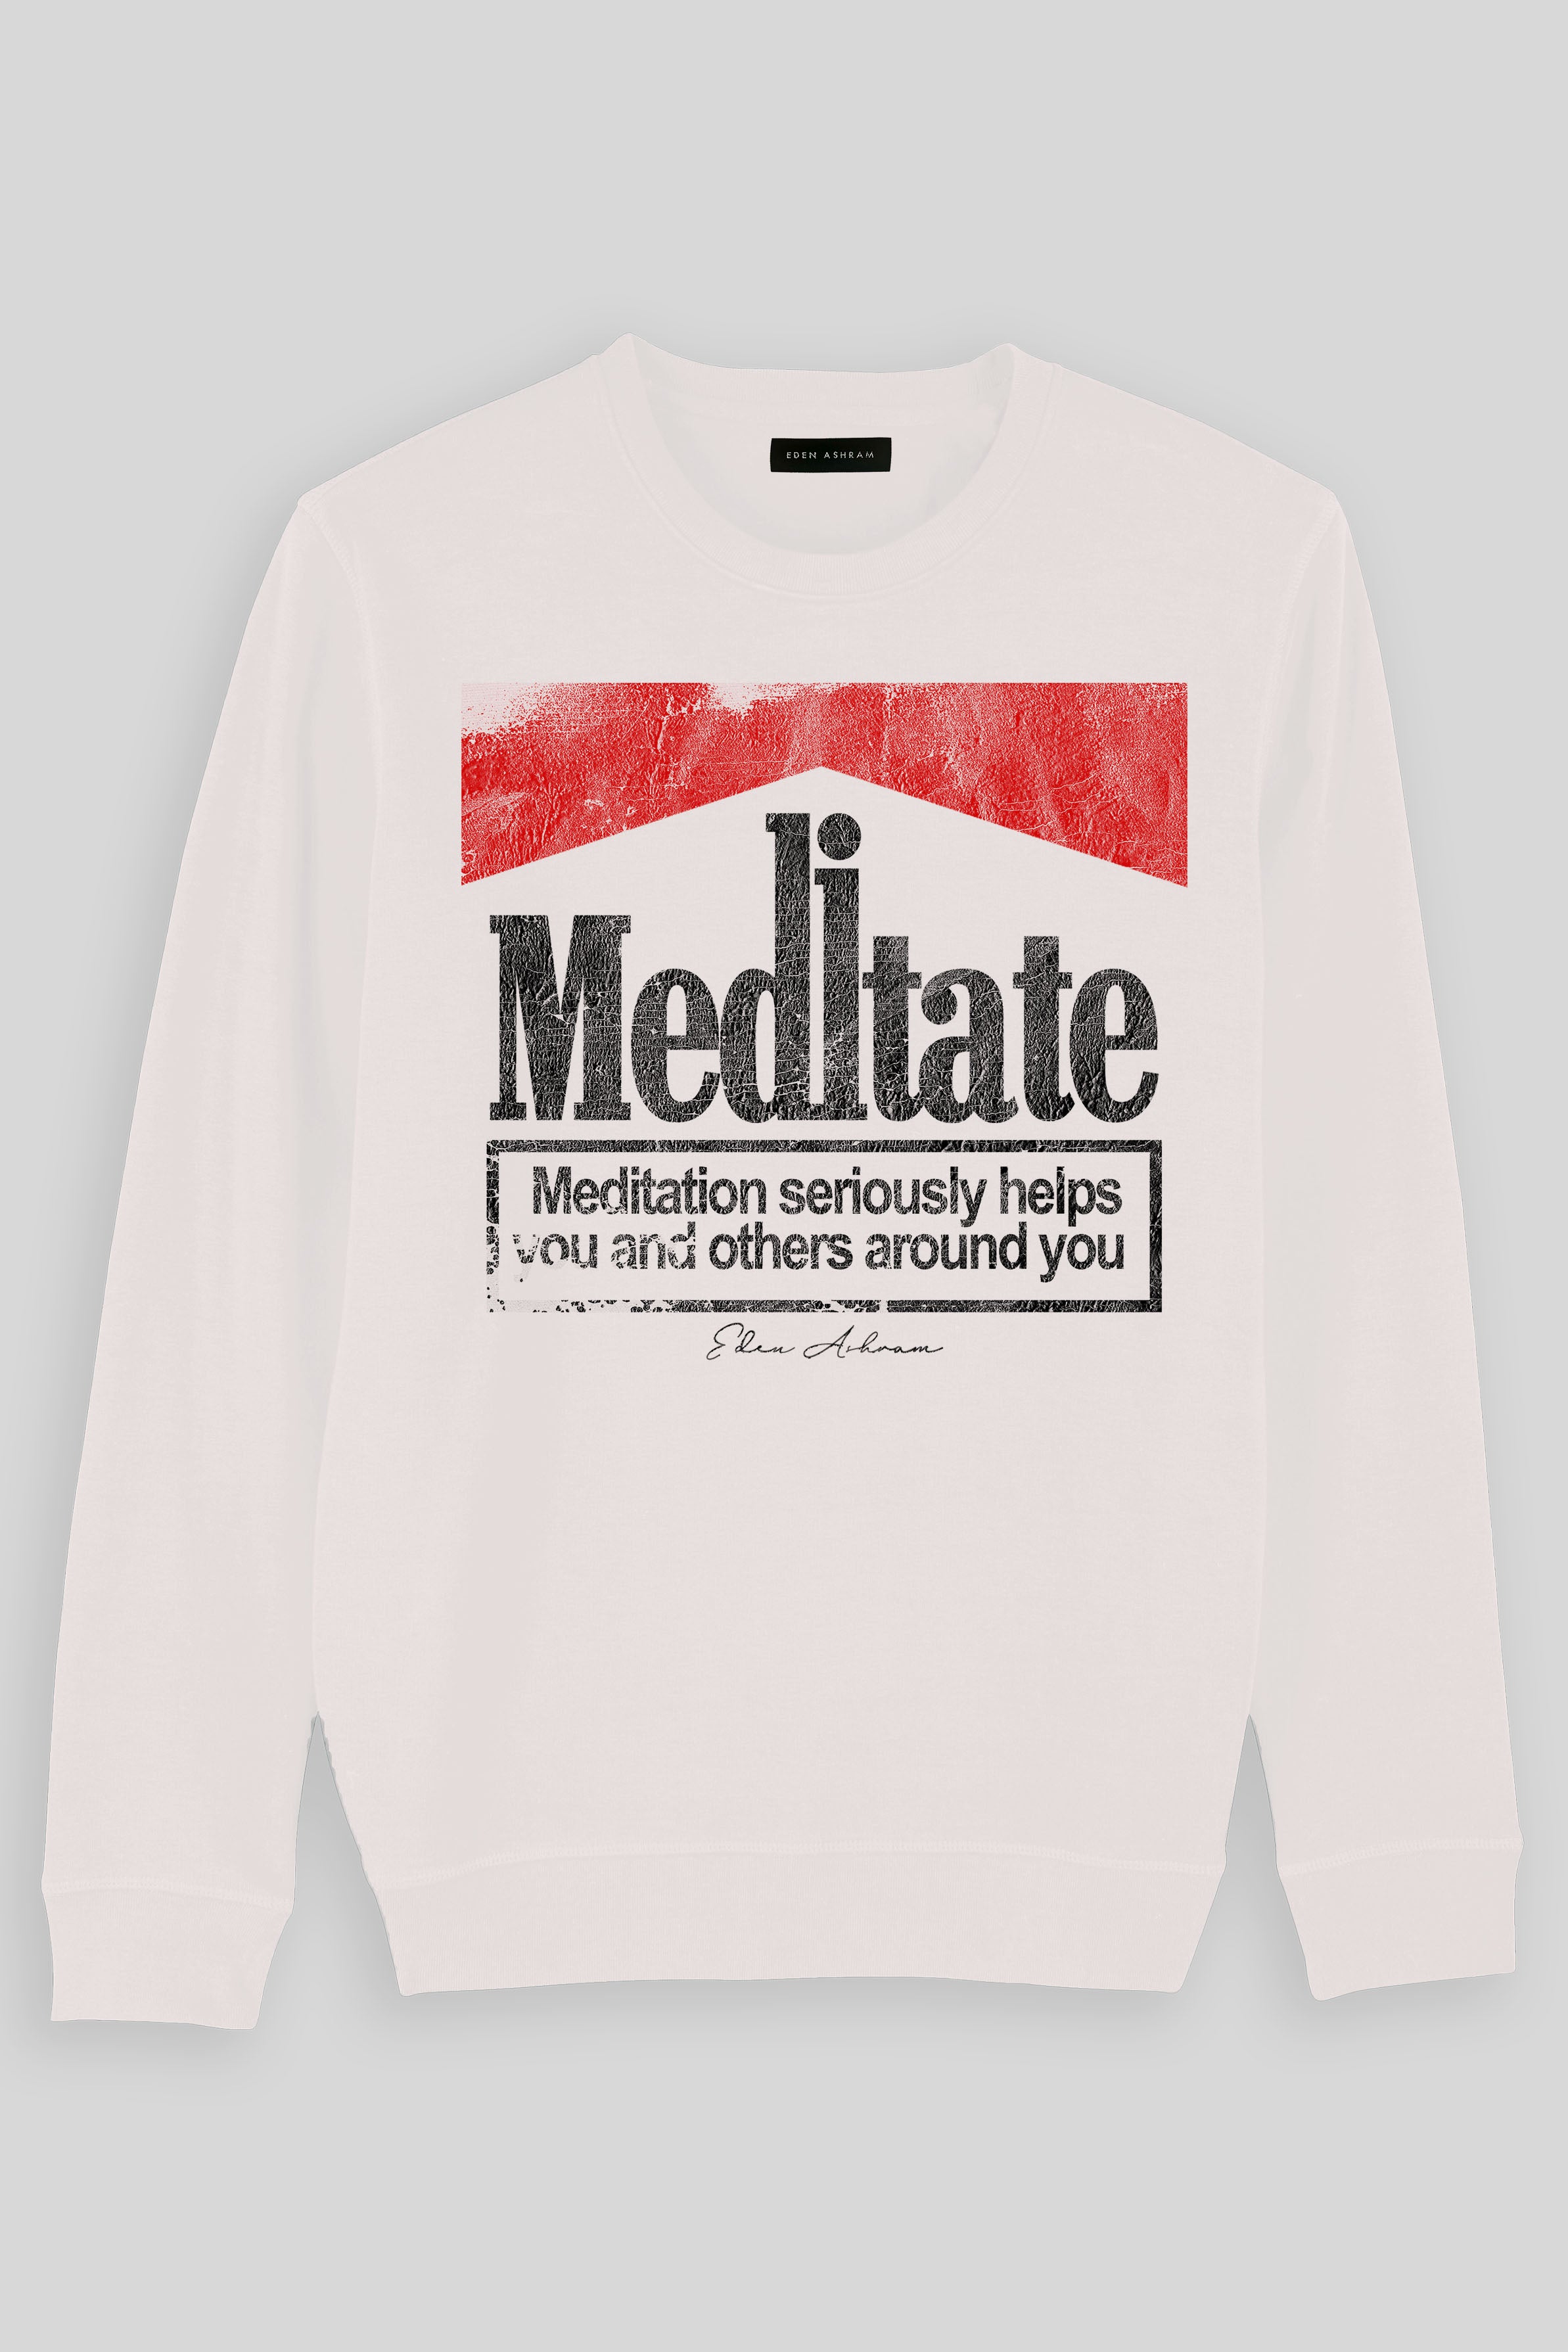 Eden Ashram Meditate 2.0 Premium Crew Neck Sweatshirt Vintage White | Warning